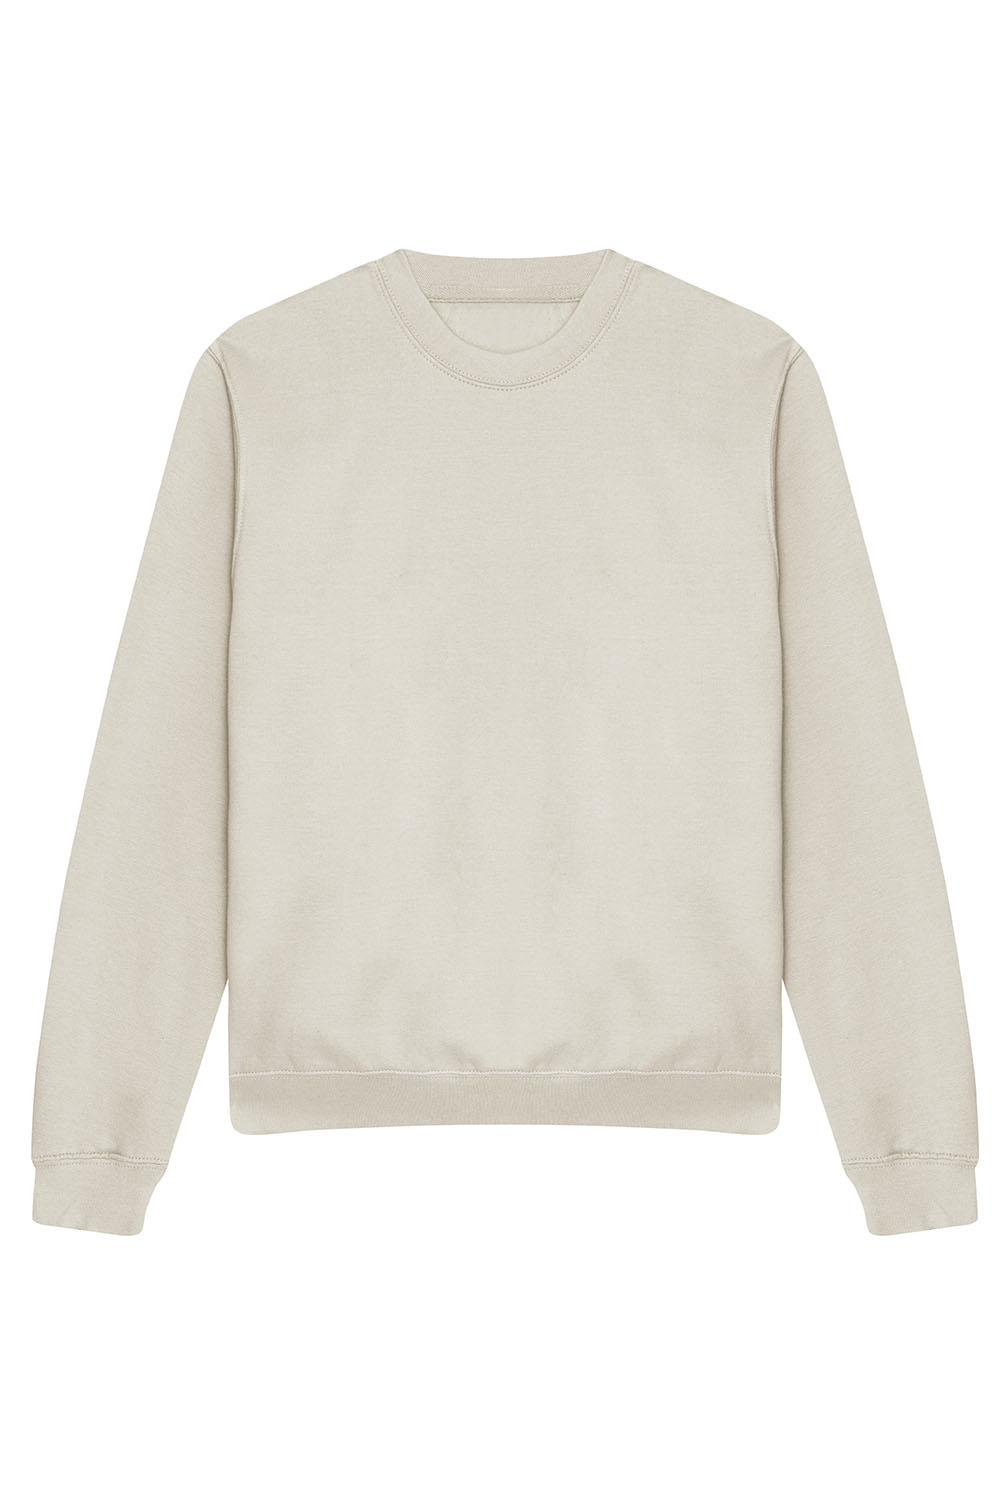 Plain Sweatshirt In Natural Stone (Single)